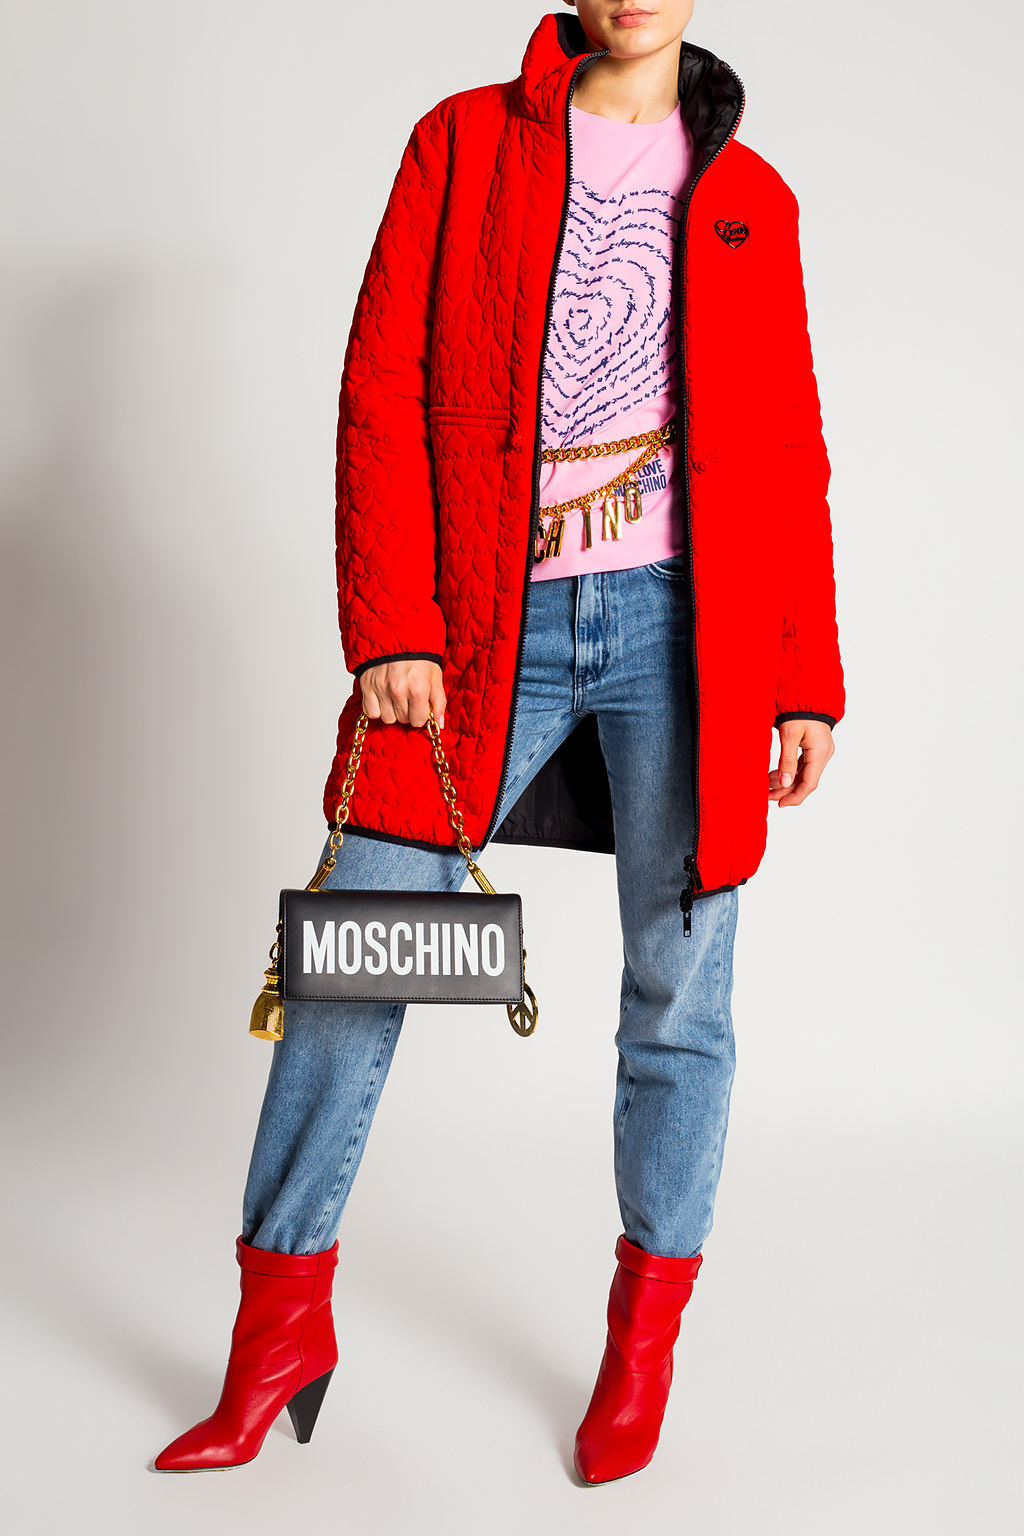 Moschino - LEGGINGS Size M